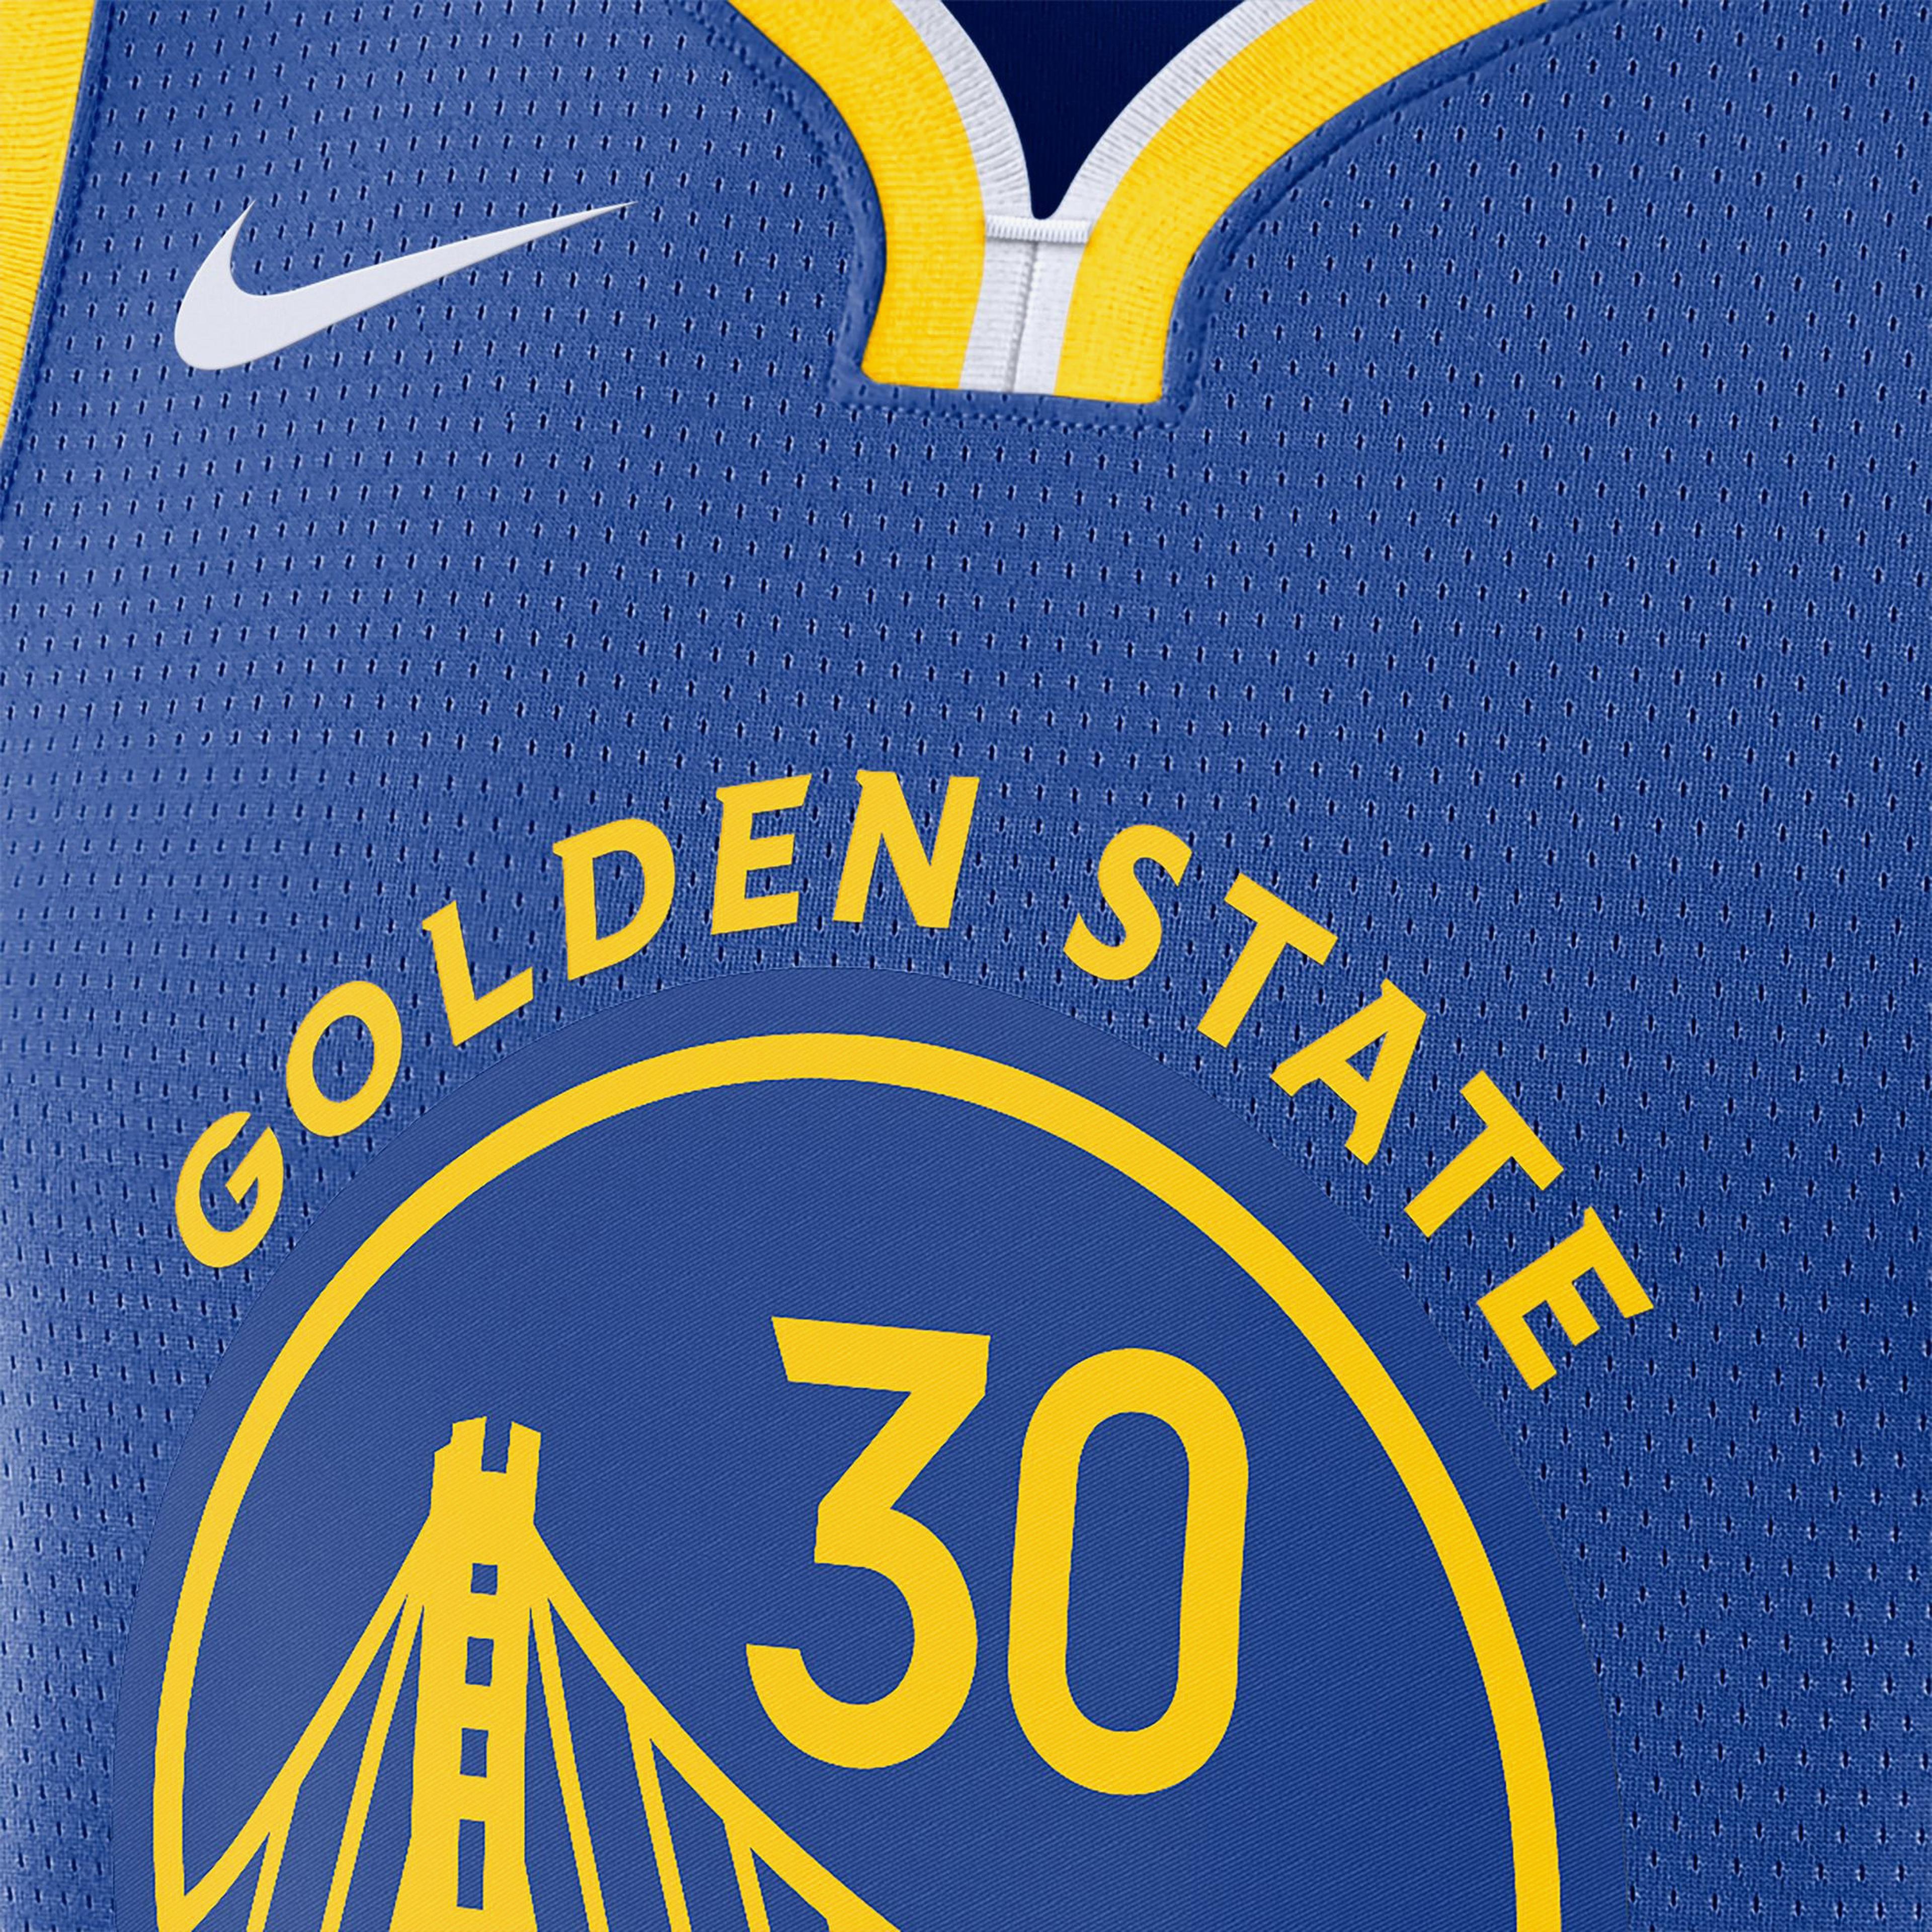 Nike Golden State Warriors Icon Edition Erkek Lacivert Forma